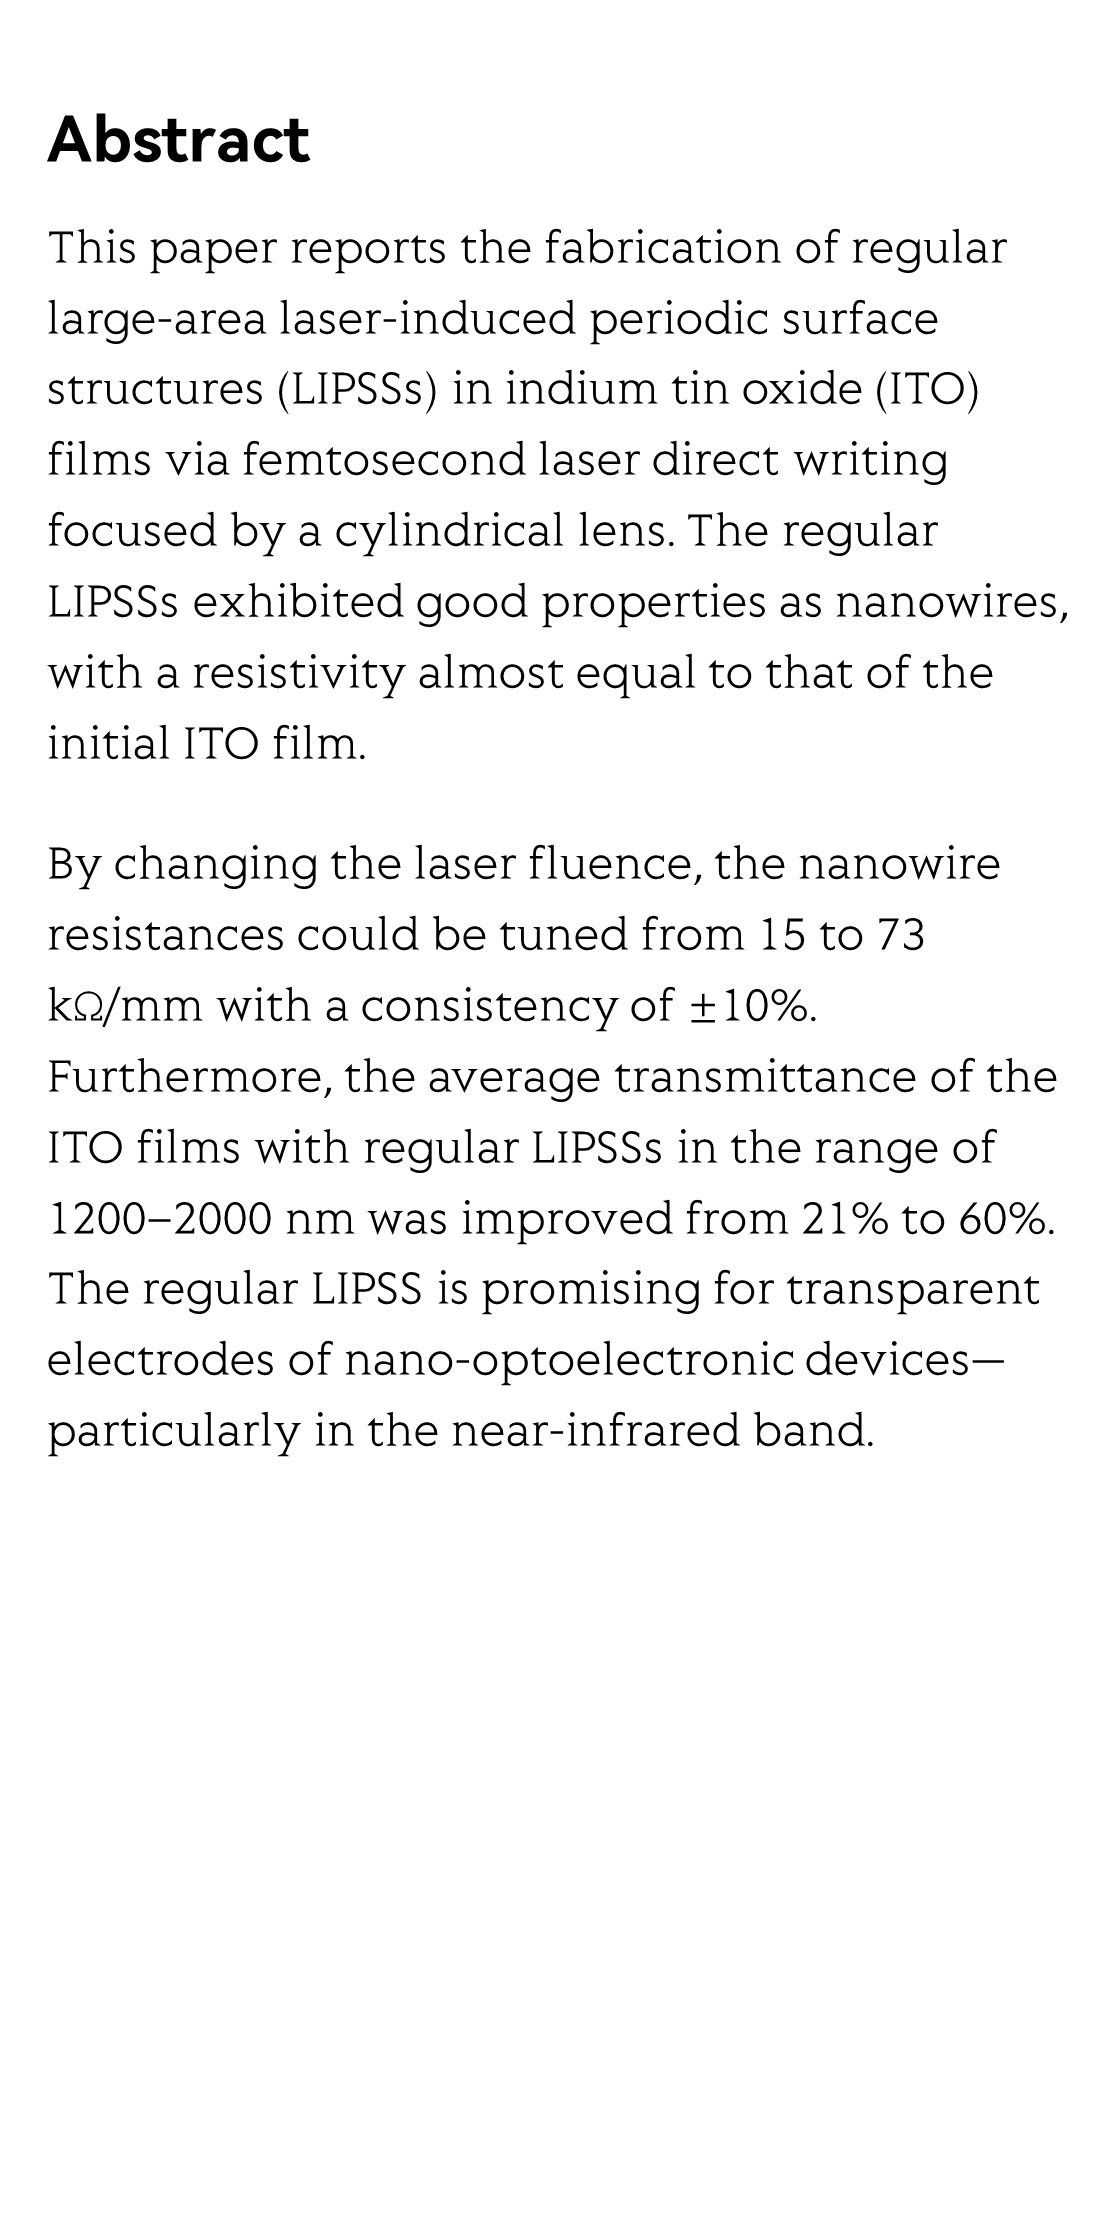 Periodic transparent nanowires in ITO film fabricated via femtosecond laser direct writing_2